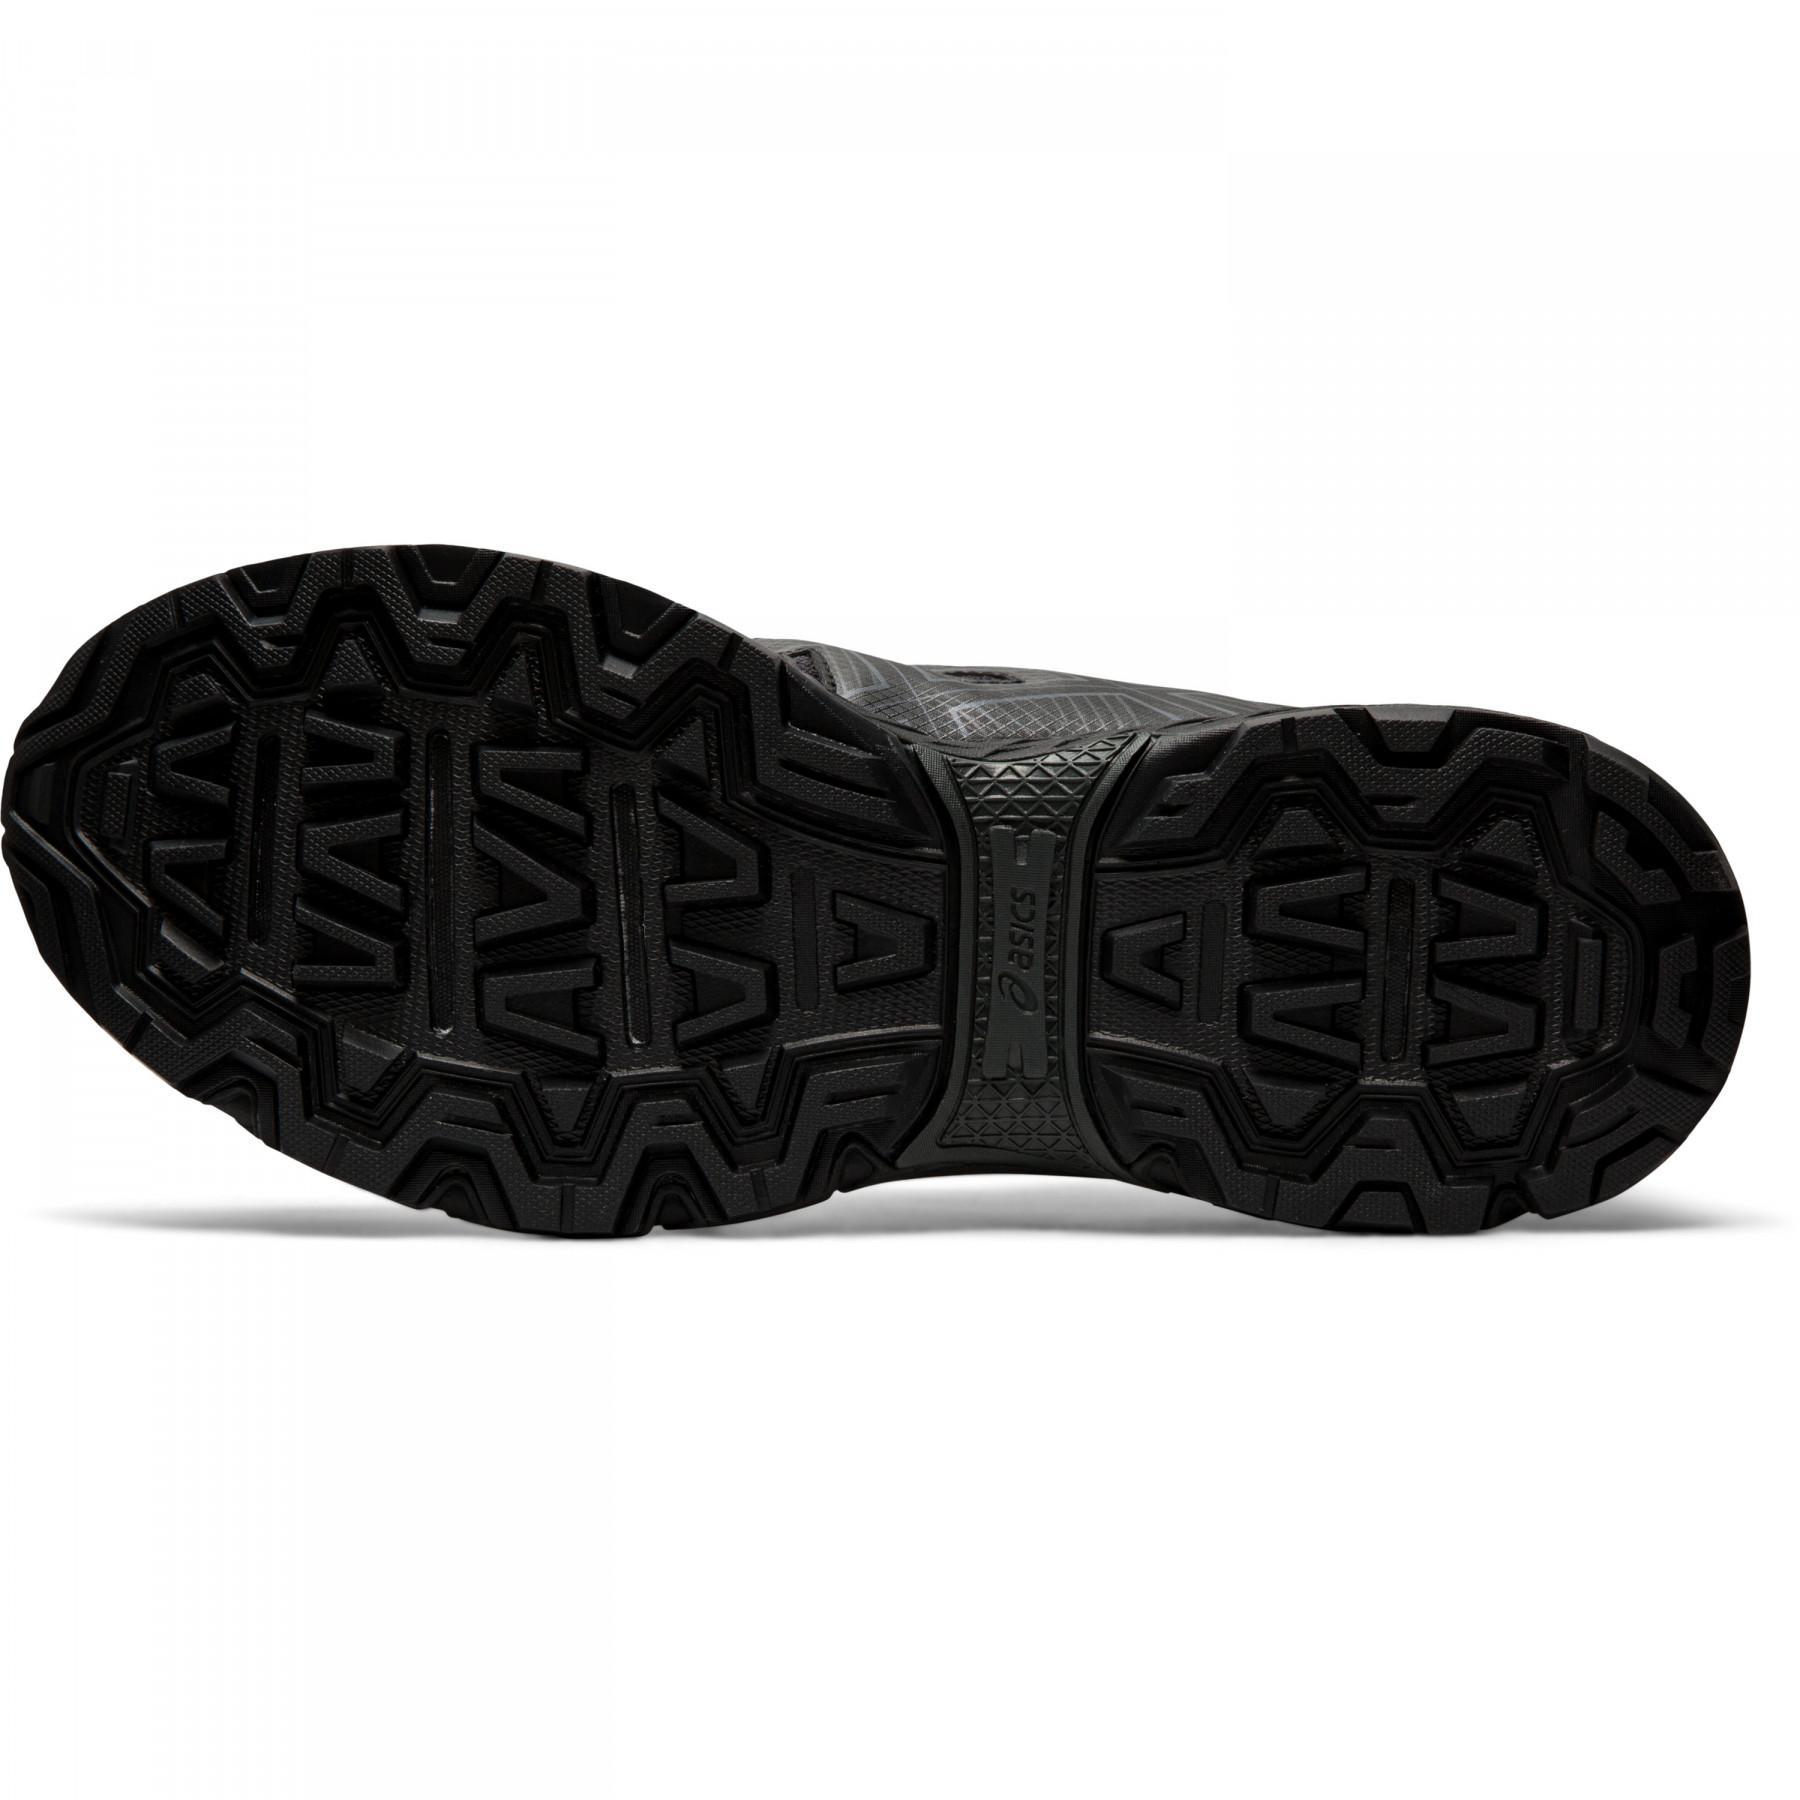 Trail shoes Asics Gel-Venture 7 Wp